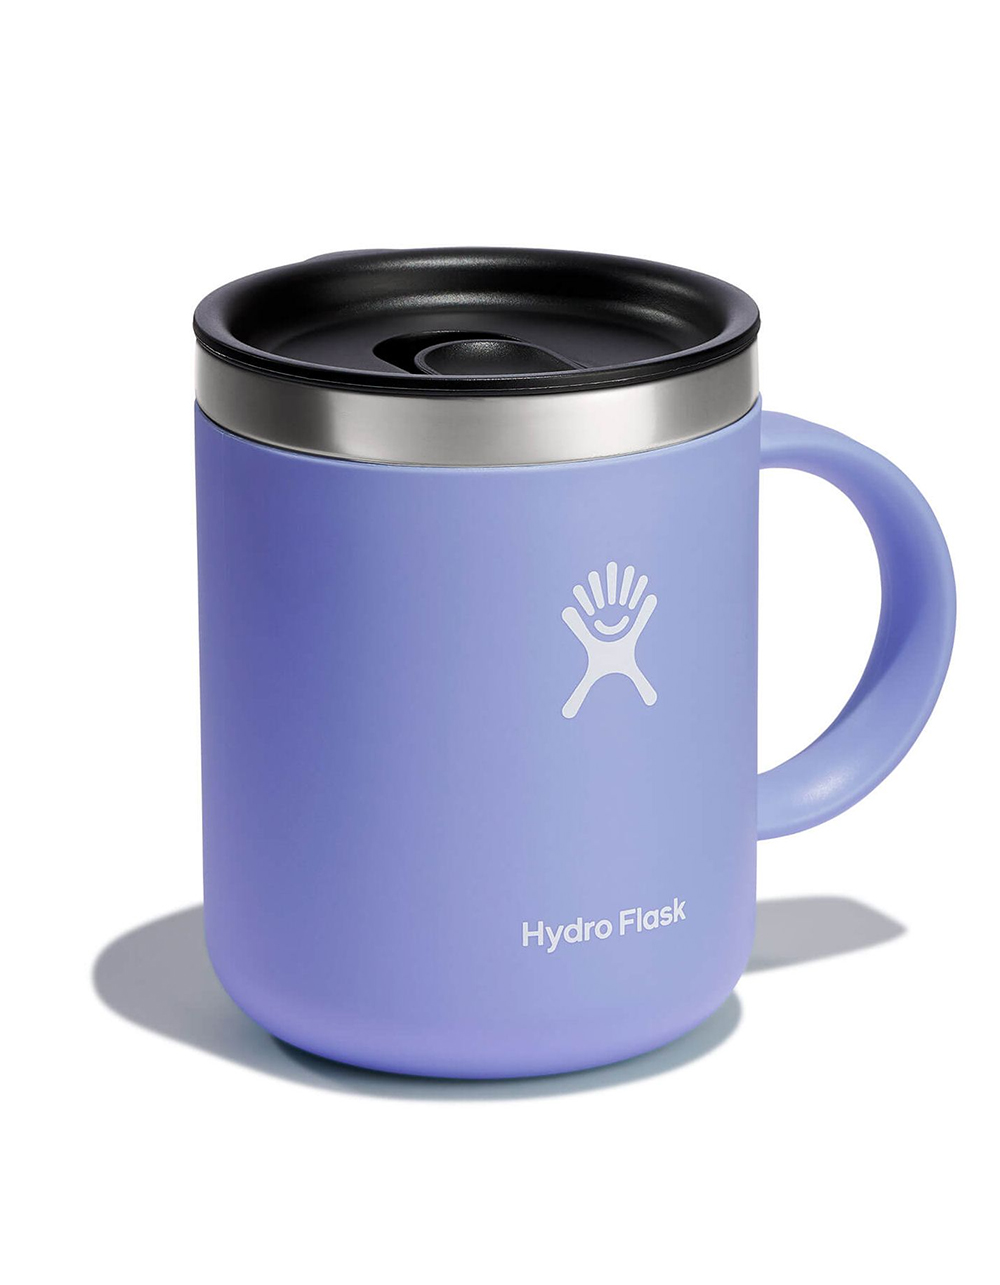 Hydro Flask 12 oz. Mug - White $ 27.95